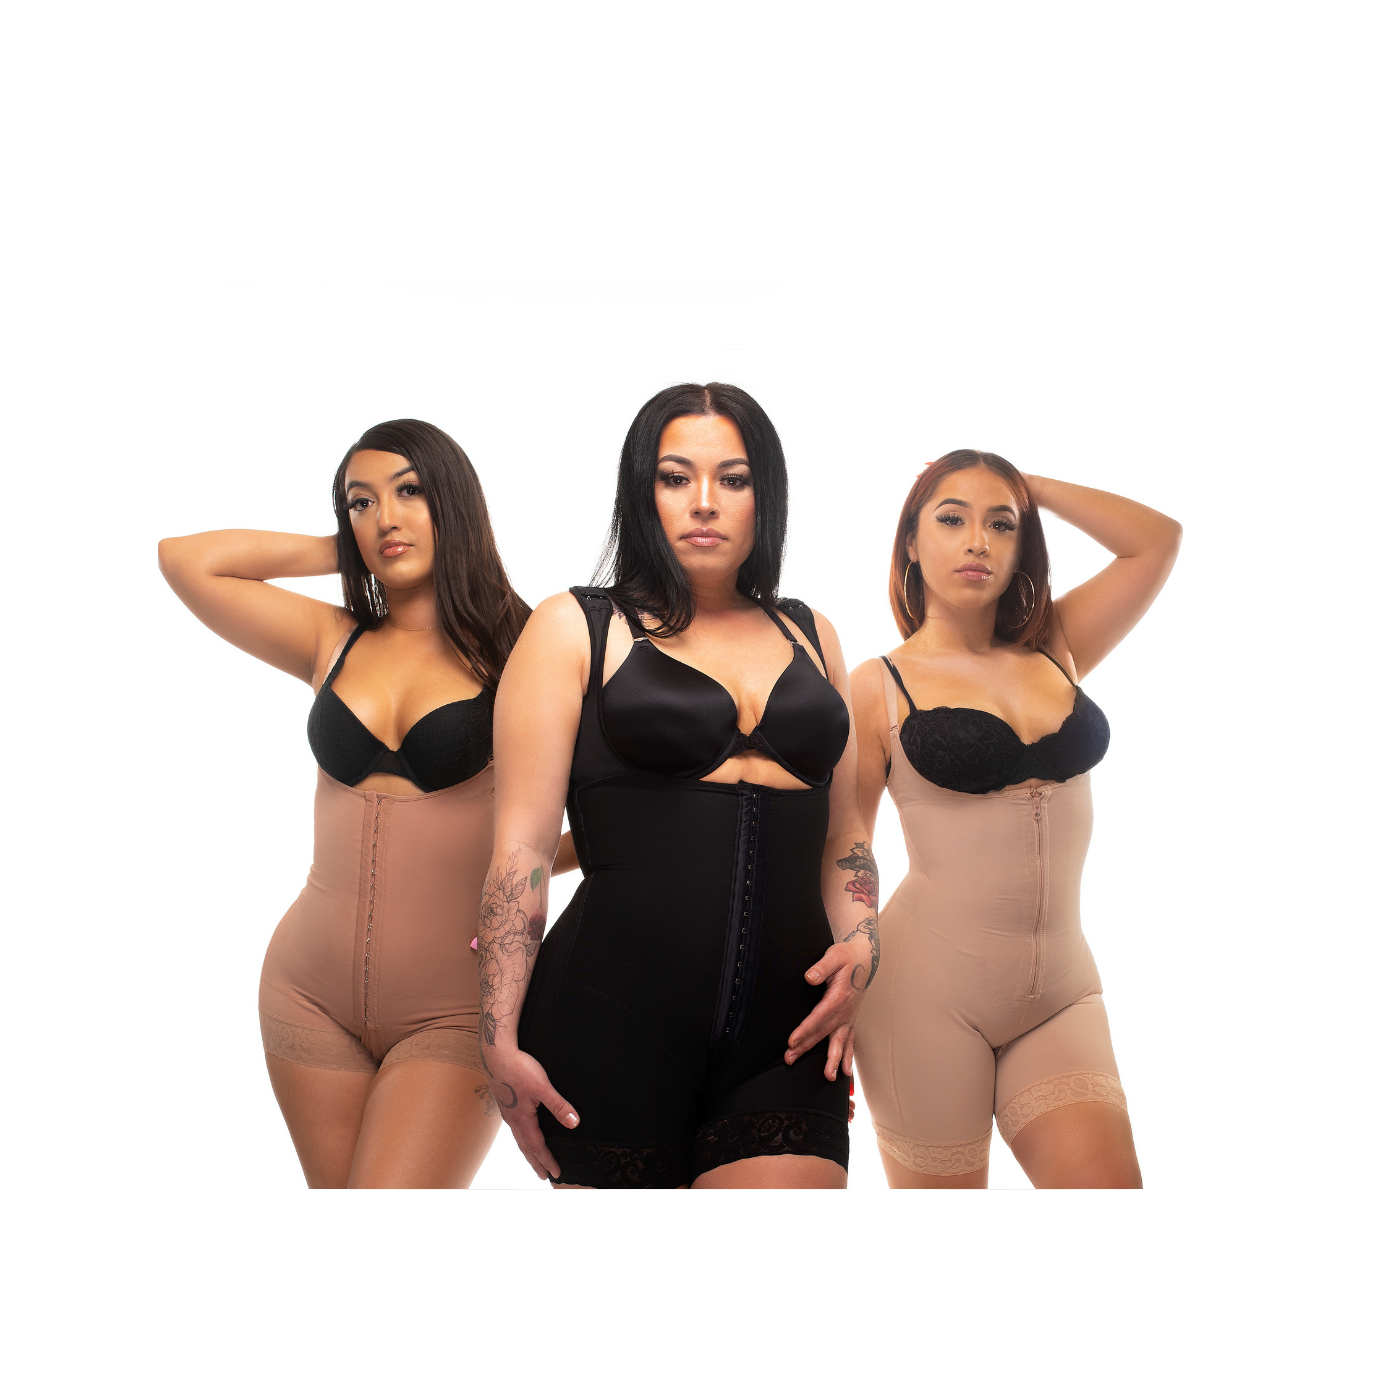 Honey Lily Women's Body Shapewear Tummy Control Body Shaper Fajas- Violet:  Black - Honey Lily